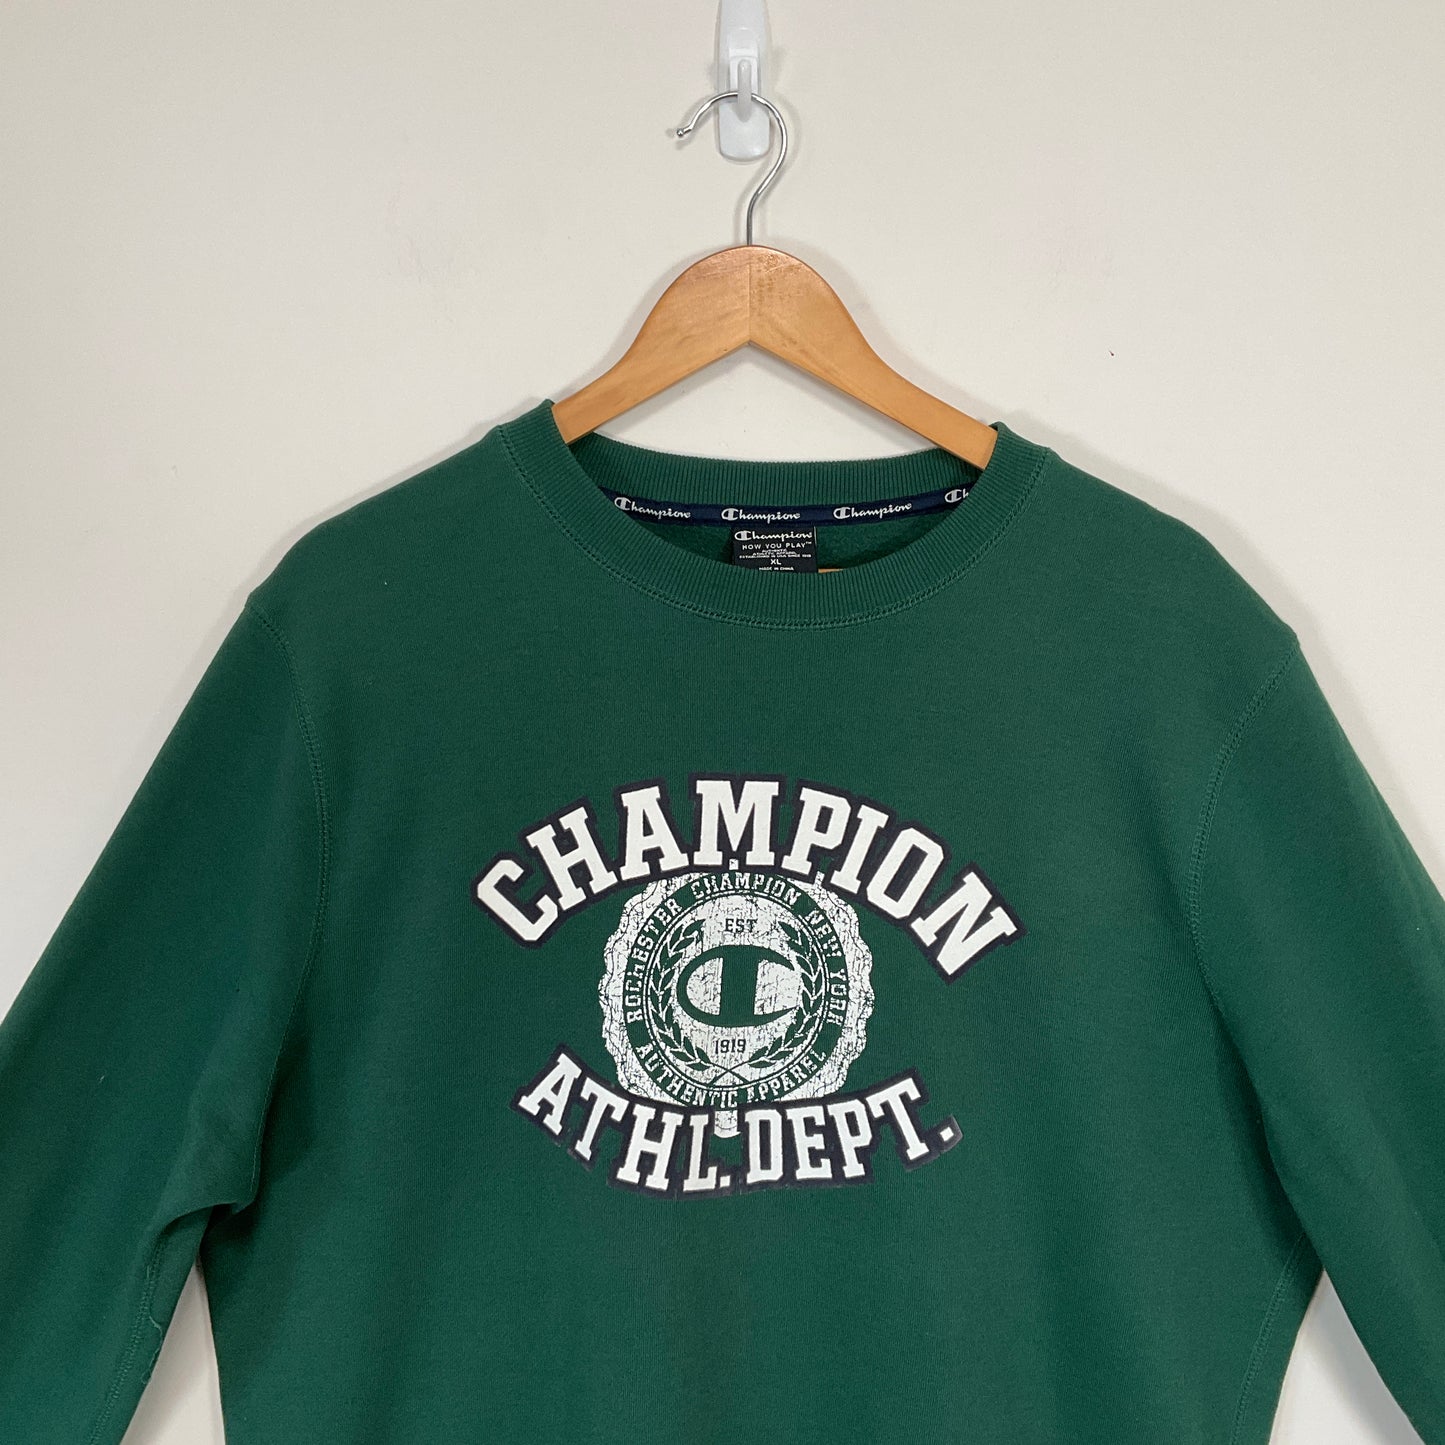 Champion - ATHL.DEPT Sweatshirt